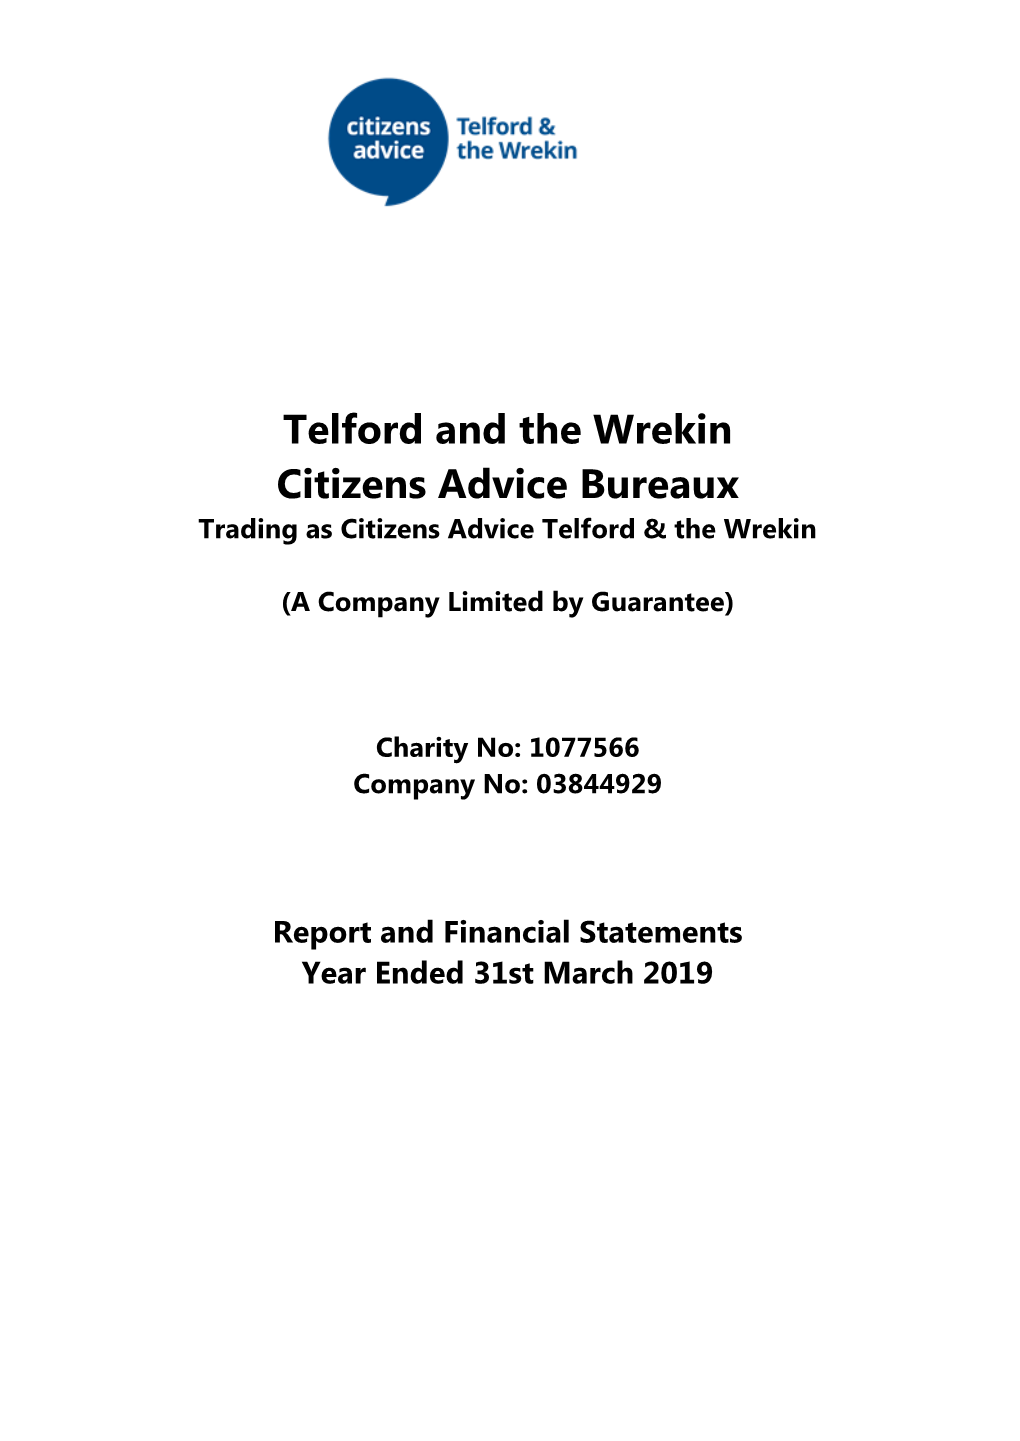 Telford and the Wrekin Citizens Advice Bureaux Trading As Citizens Advice Telford & the Wrekin